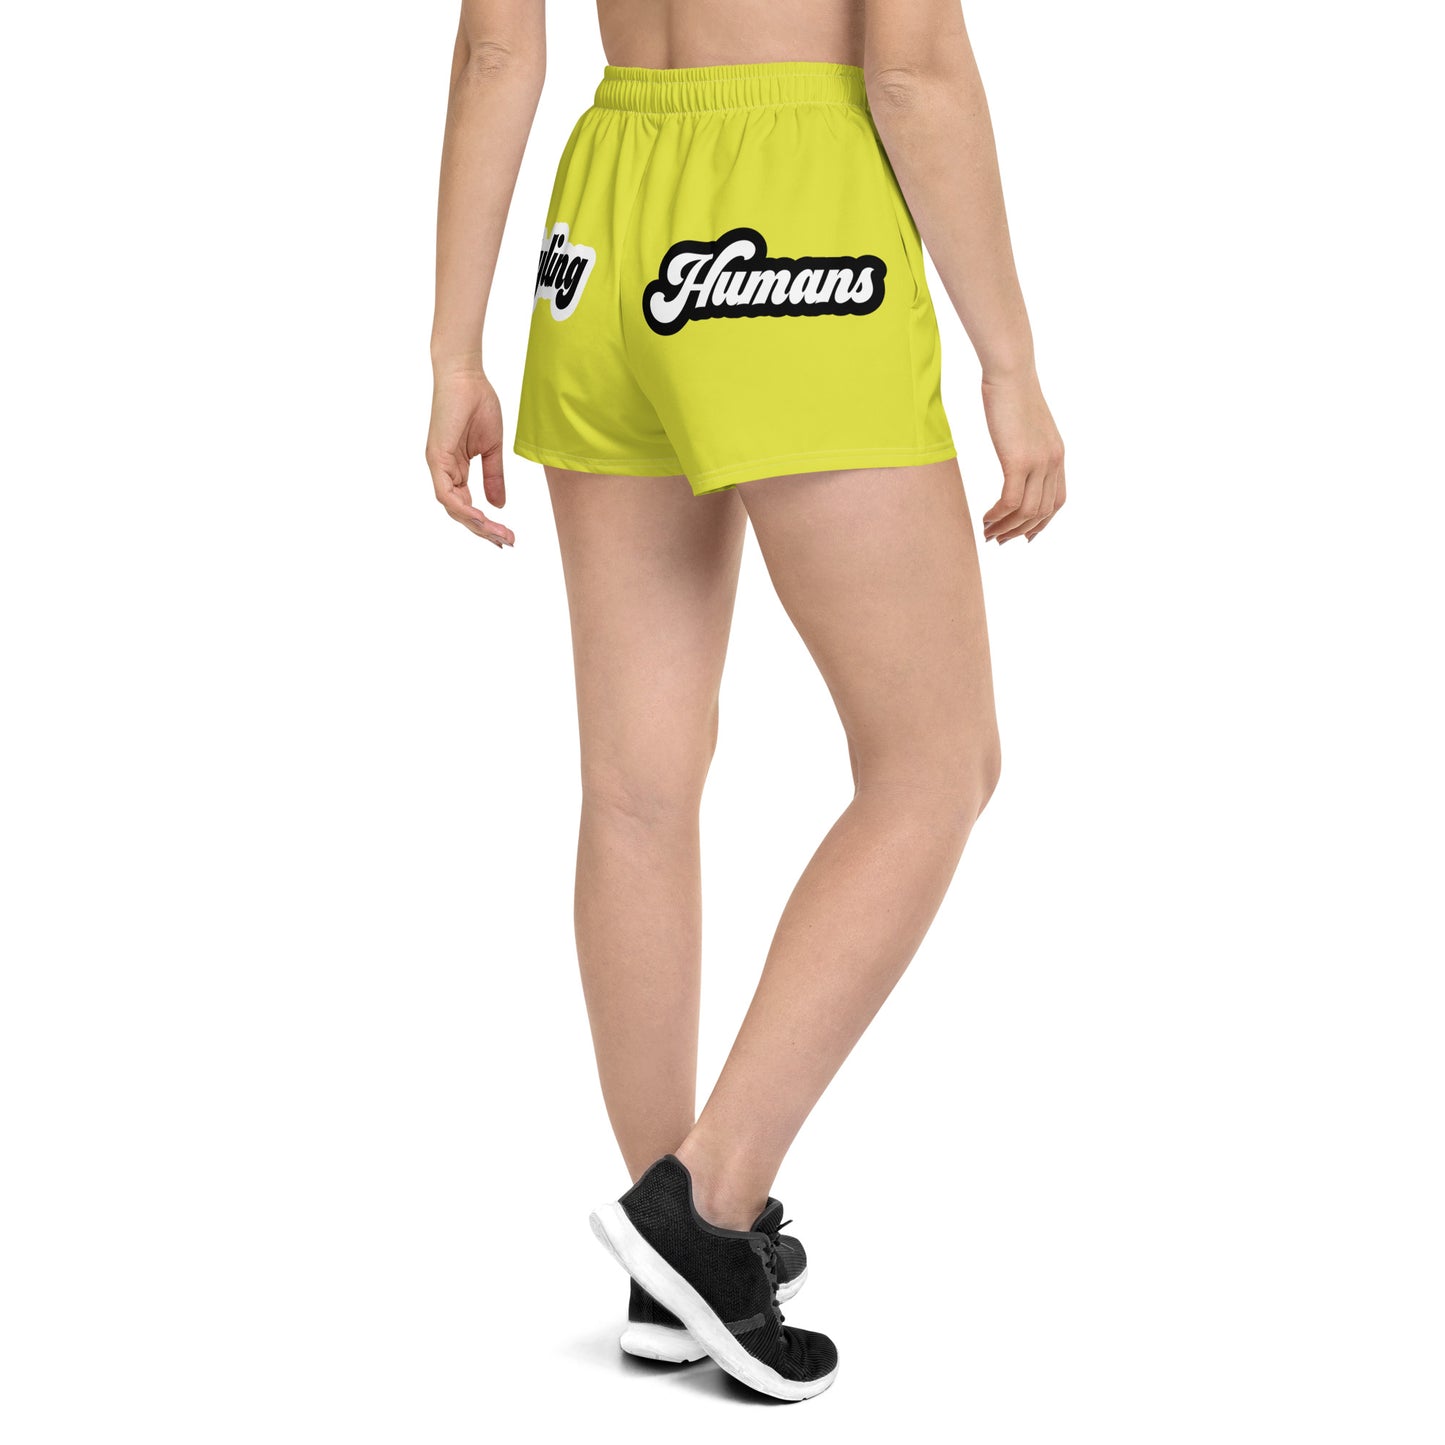 Sheè Cozy Girl Leimon Women’s Recycled Athletic Shorts